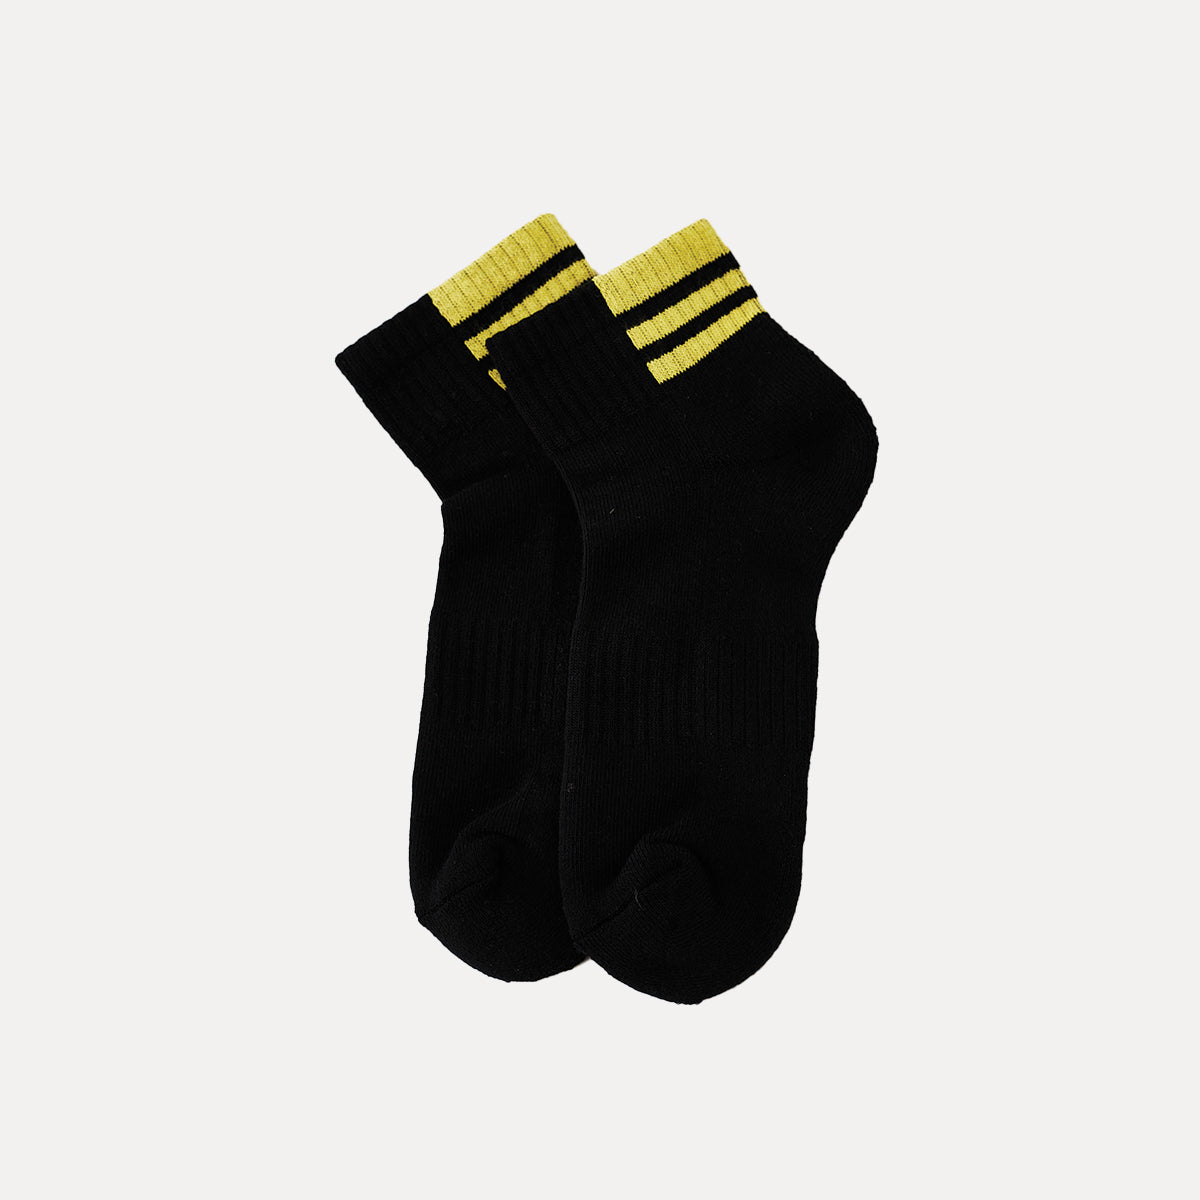 SOCKIC | Ankle Cushion Socks - Black/Yellow